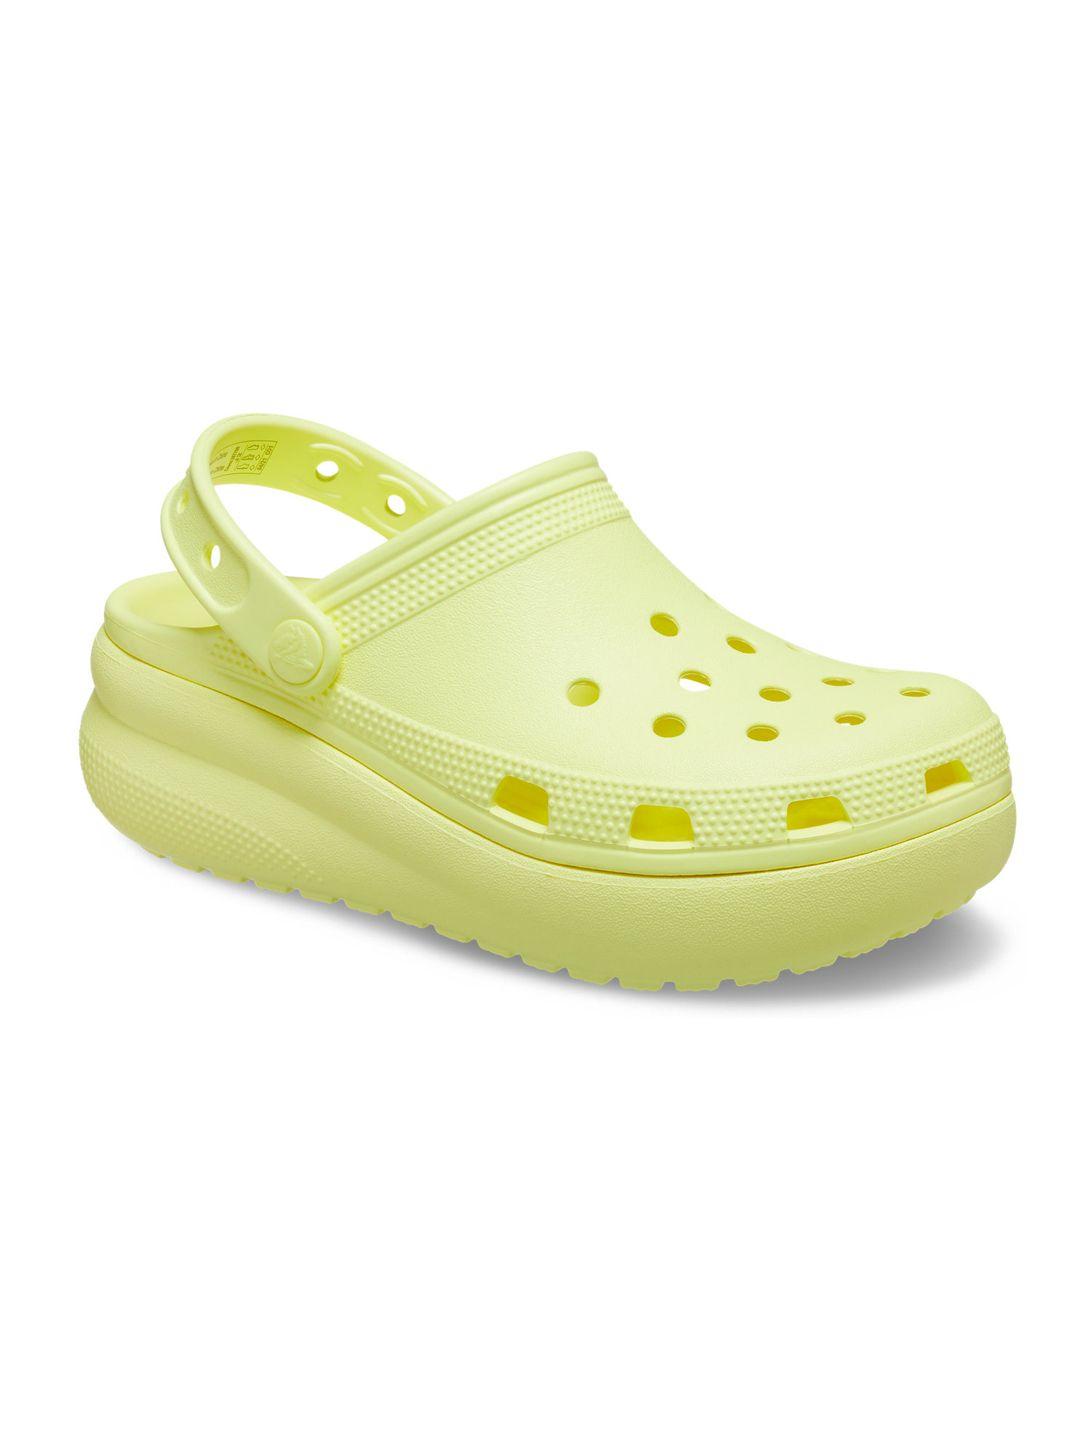 crocs unisex kids yellow clogs sandals